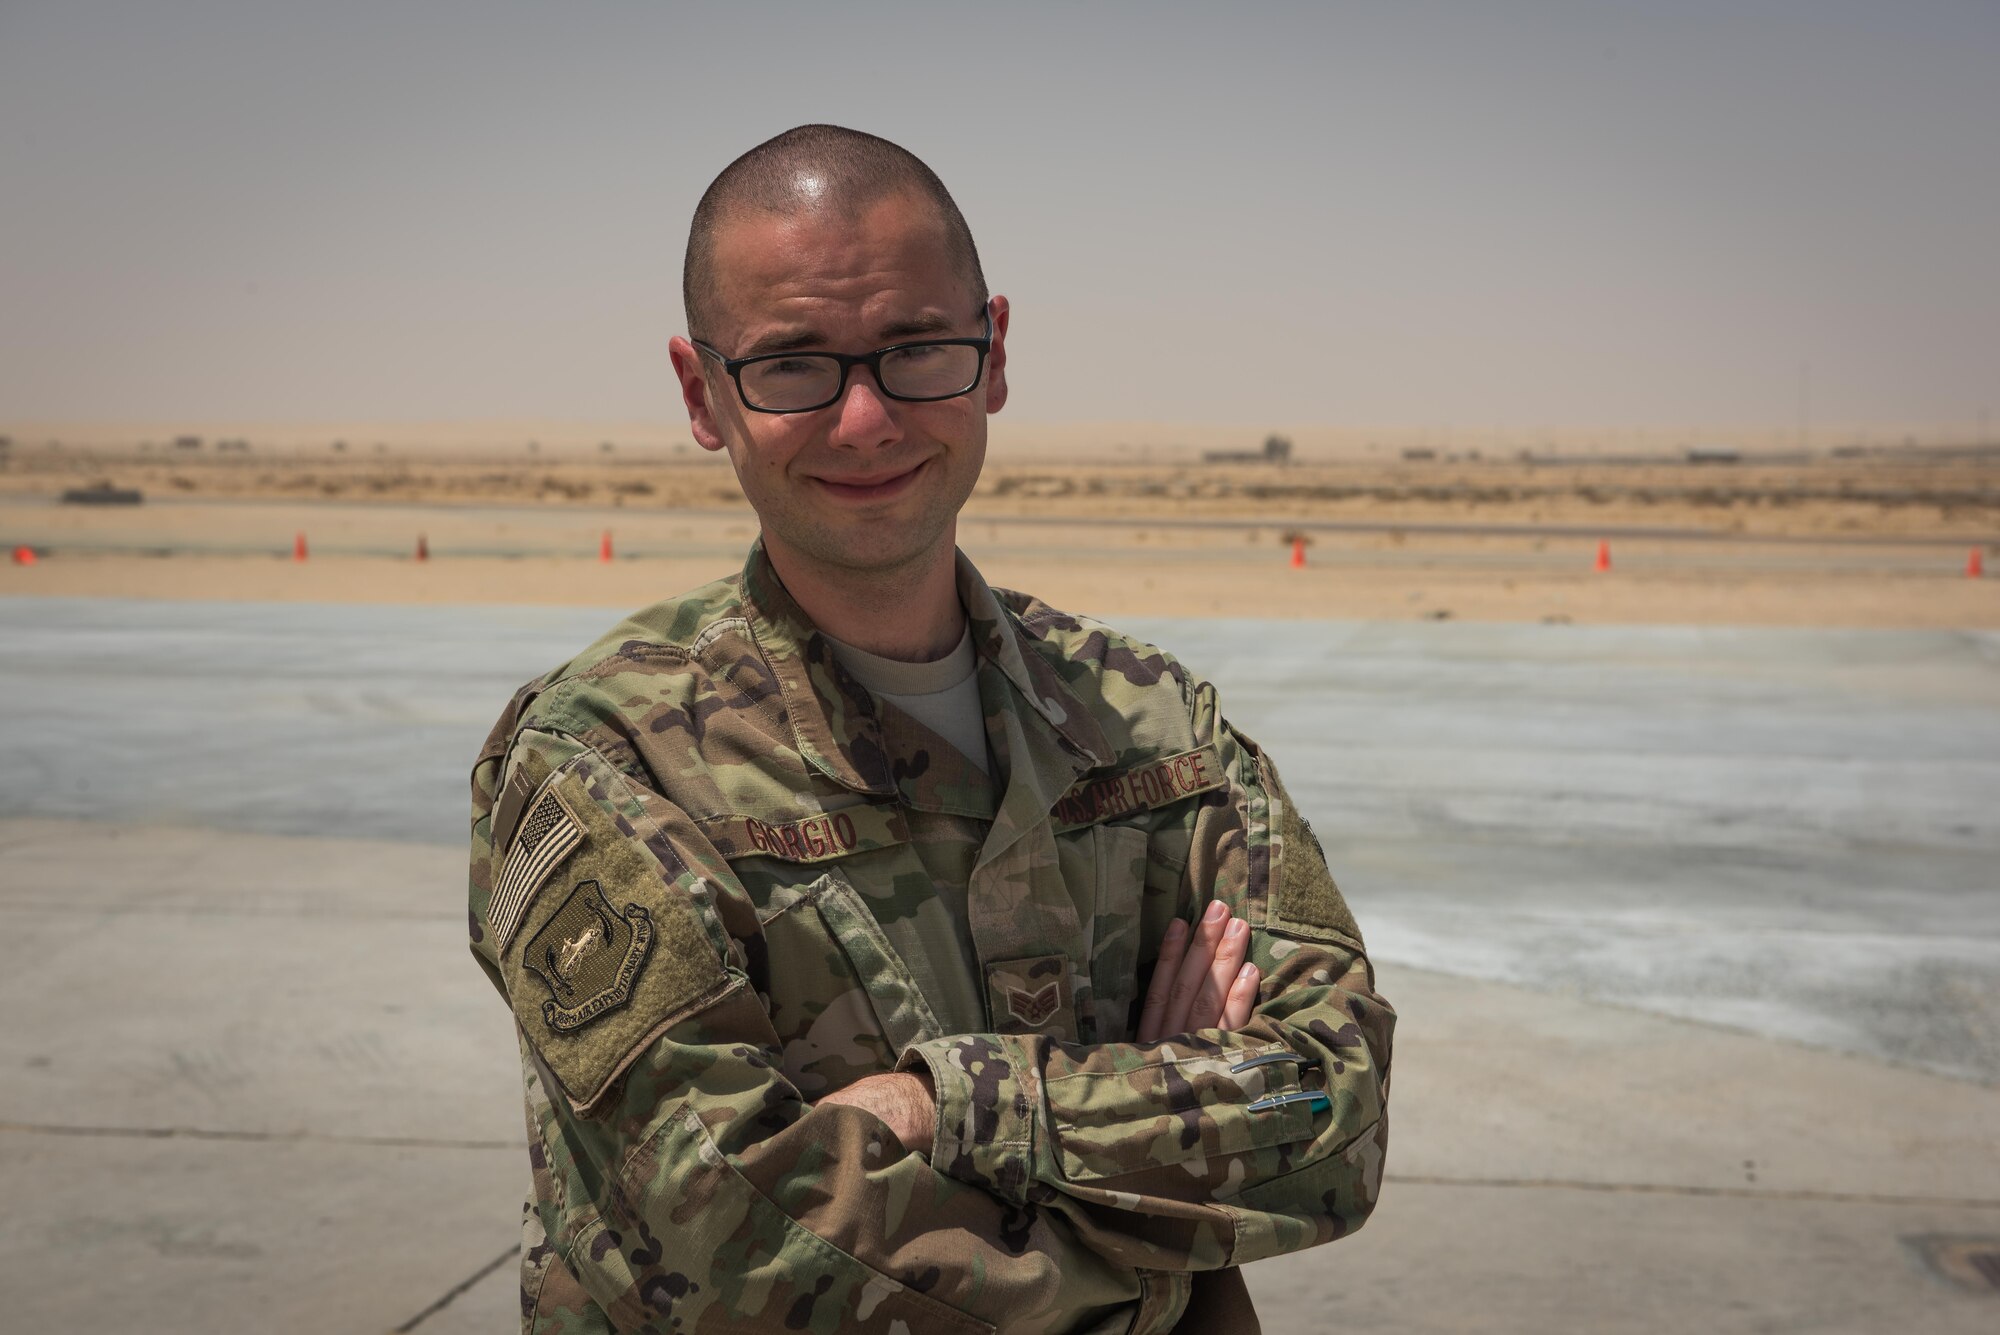 This week's Rock Solid Warrior is Senior Airman Stephan Giorgio